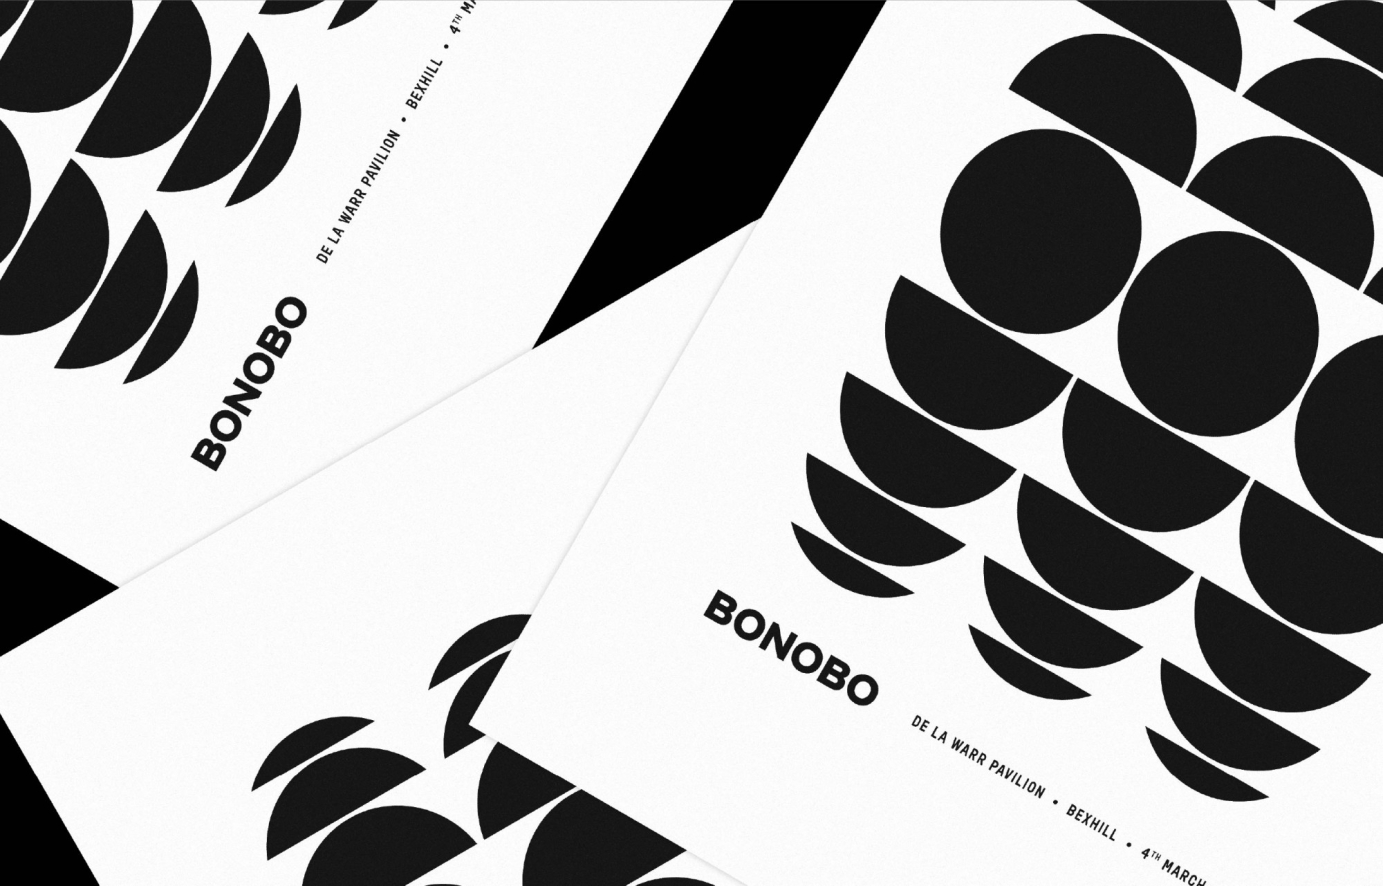 Bonobo - Screen printed merch (gig poster)